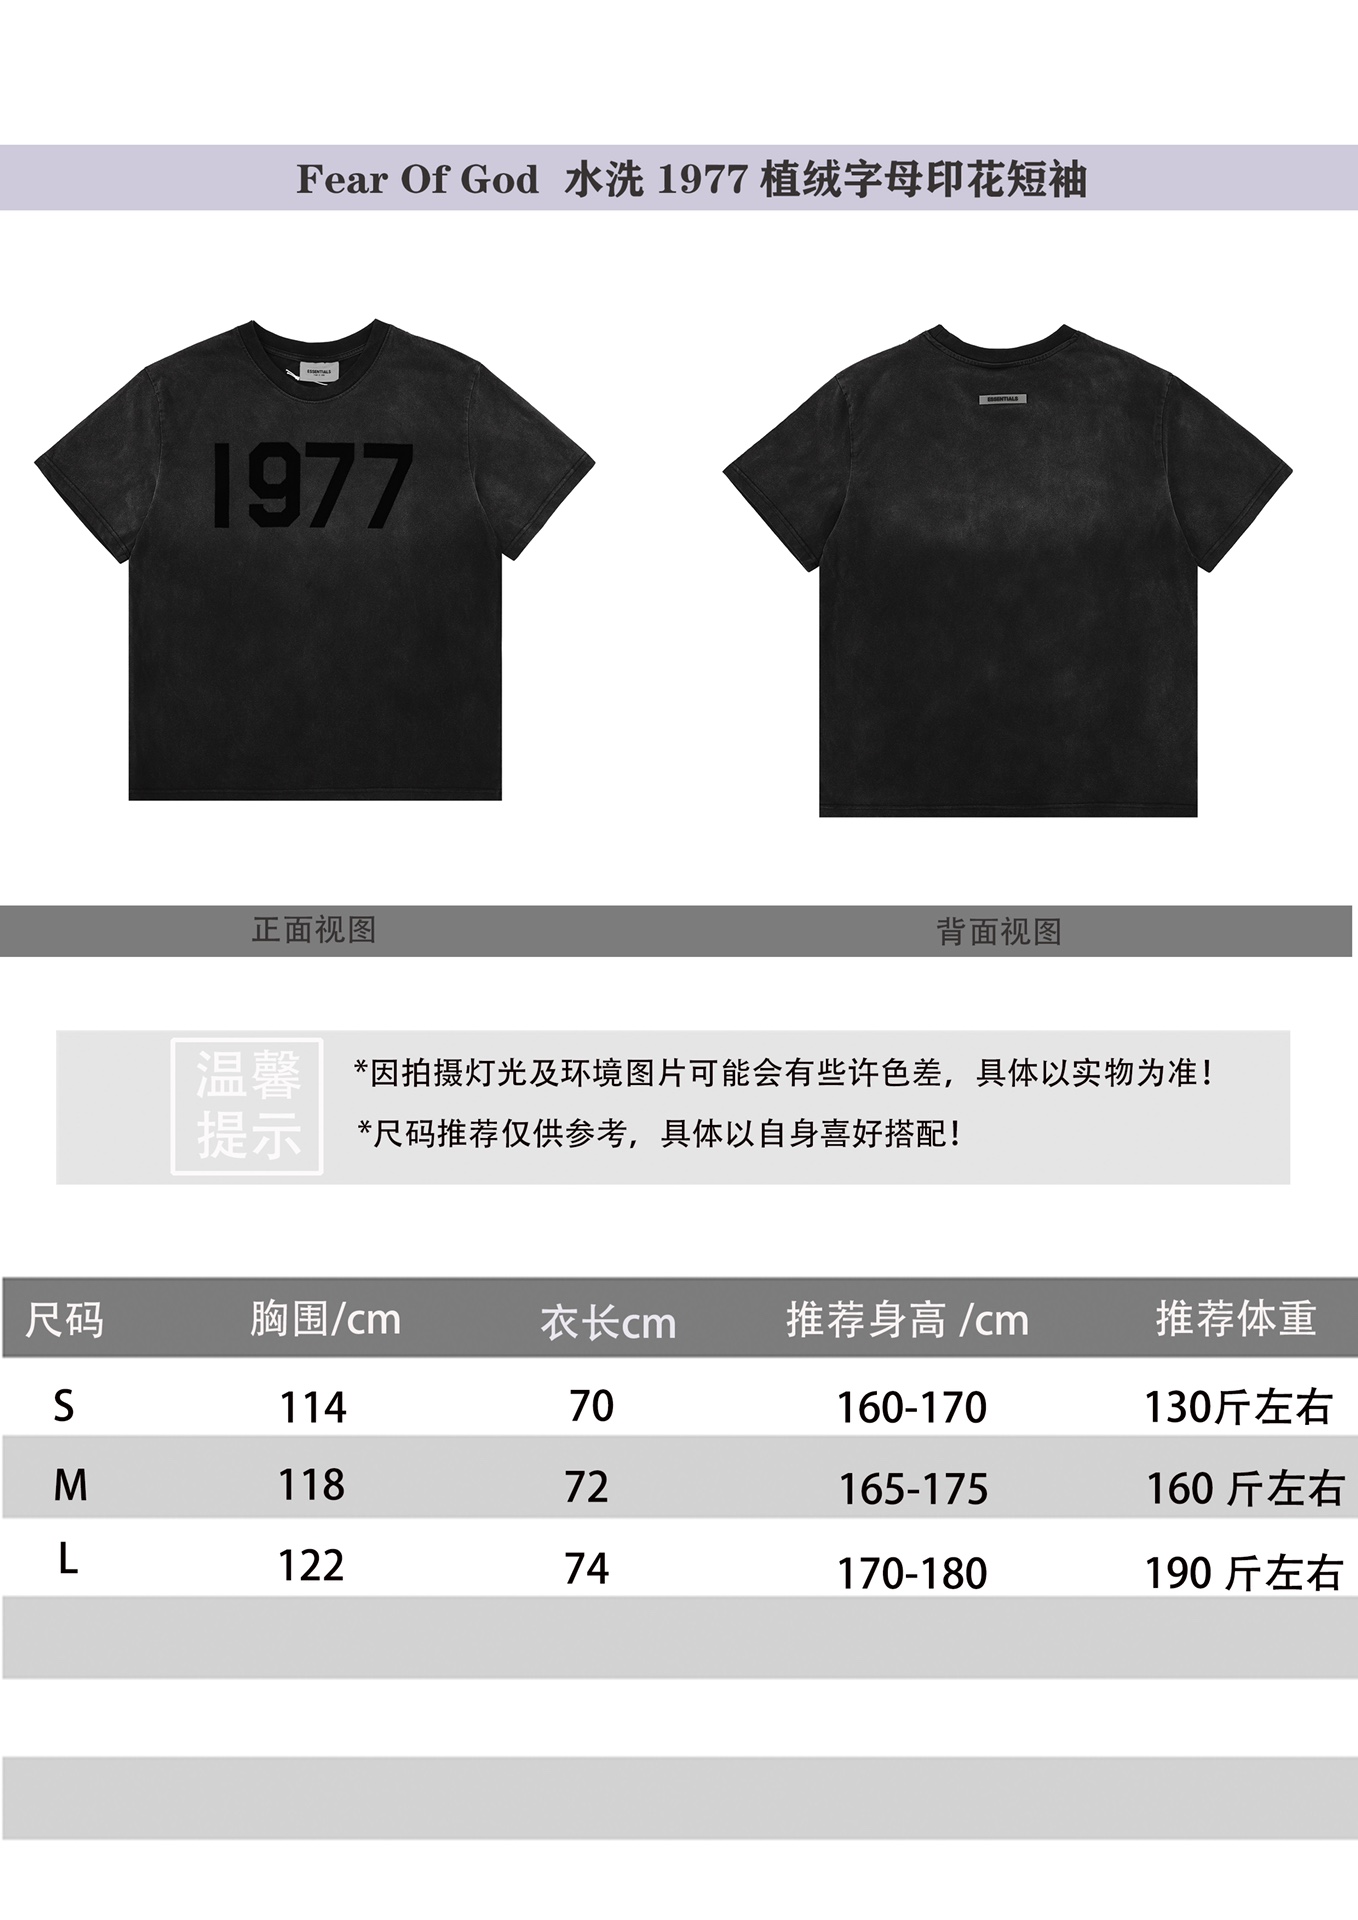 Fear Of God Clothing T-Shirt Printing Short Sleeve